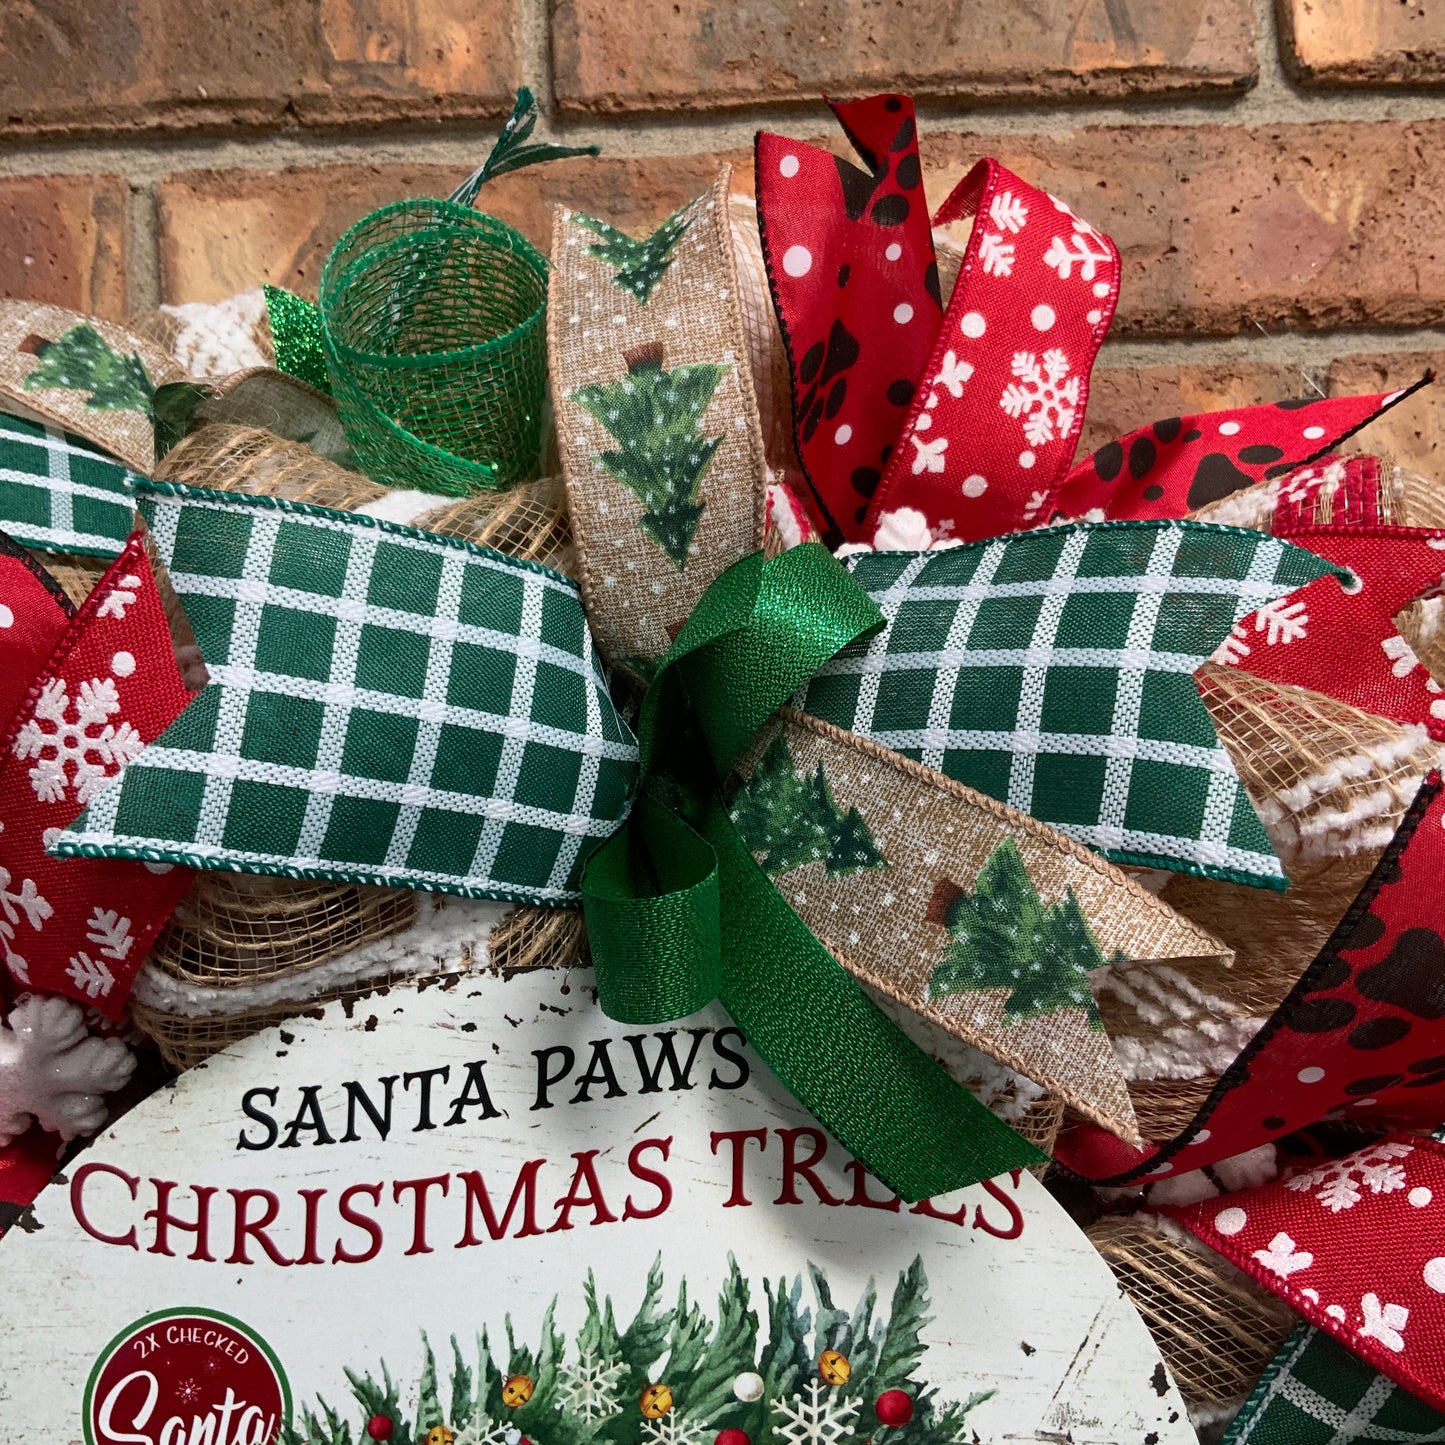 Wishing You A Golden Holiday Wreath, Christmas Dog Wreath, We Believe In Santa Paws Wreath, Christmas Dog Decor, Dog Wreath, Christmas Dog Door Hanger, Custom Order